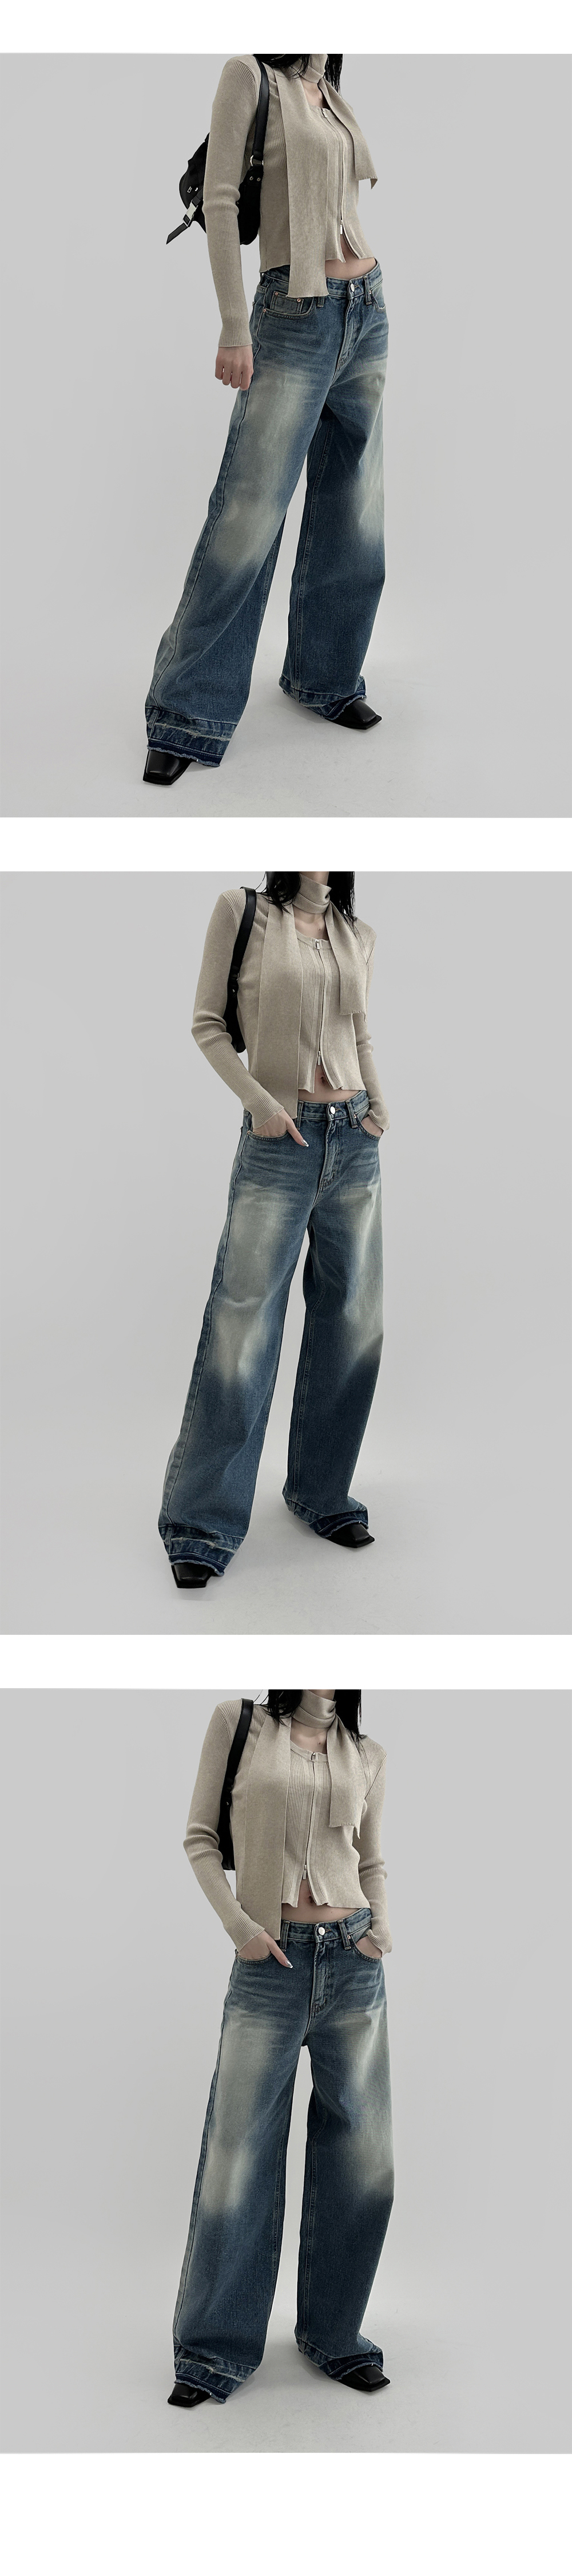 suspenders skirt/pants model image-S1L7